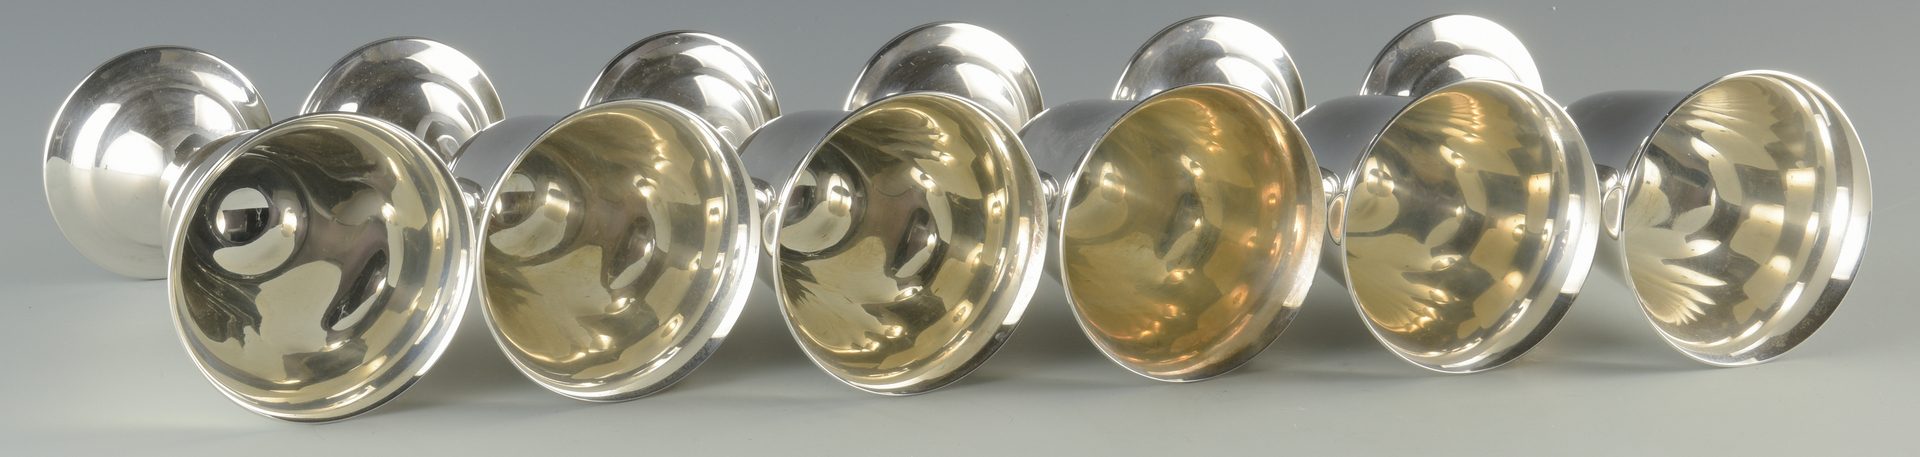 Lot 382: 12 International Sterling Silver Goblets